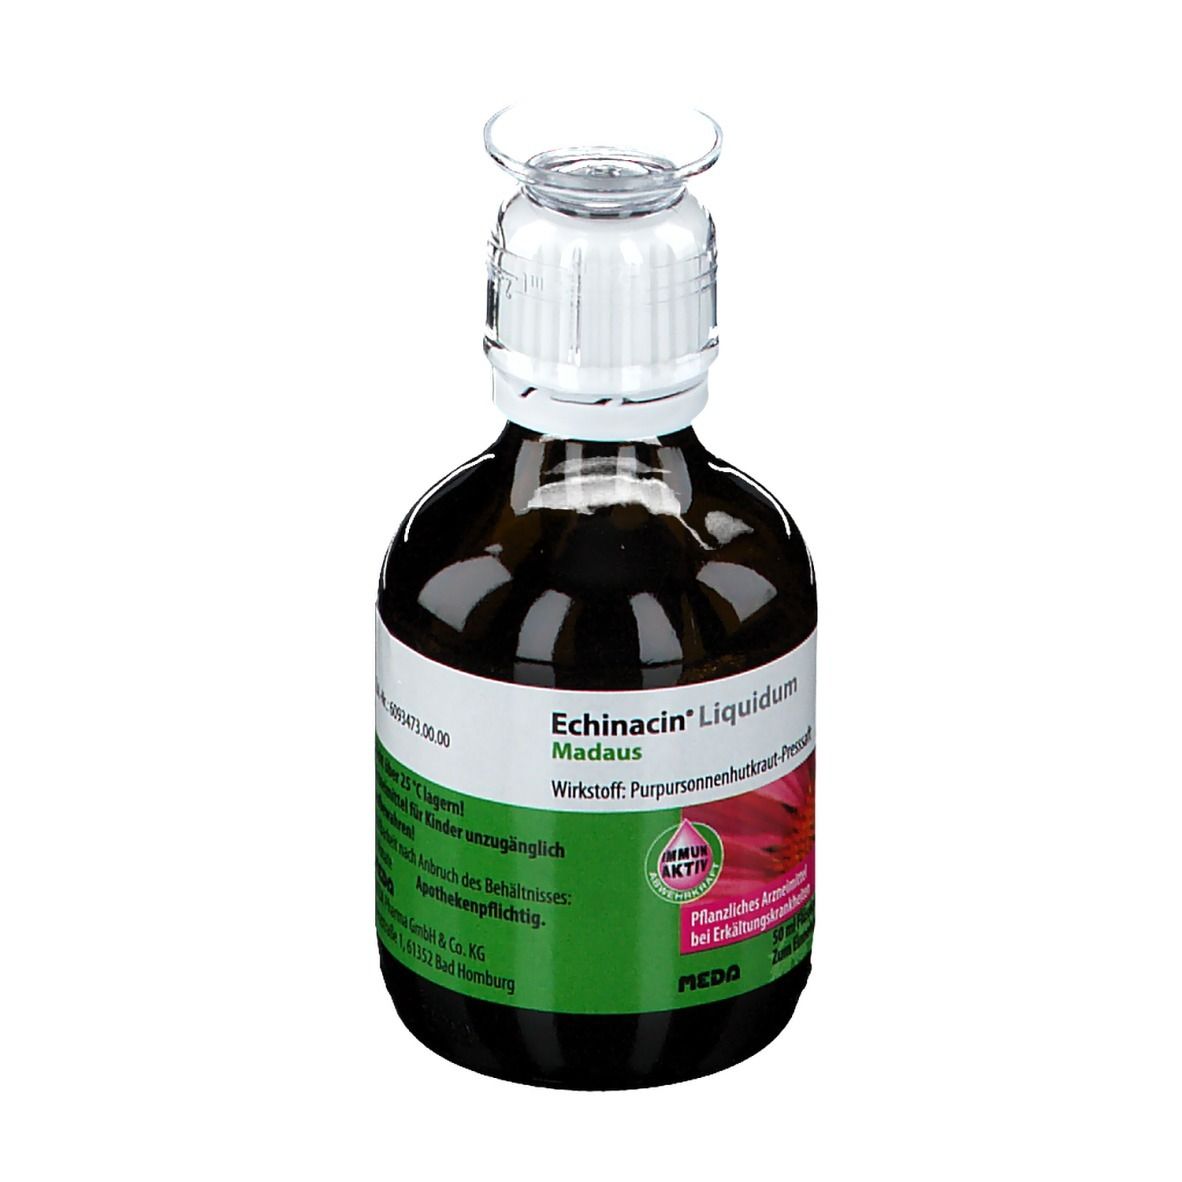 Echinacin® Liquidum Madaus